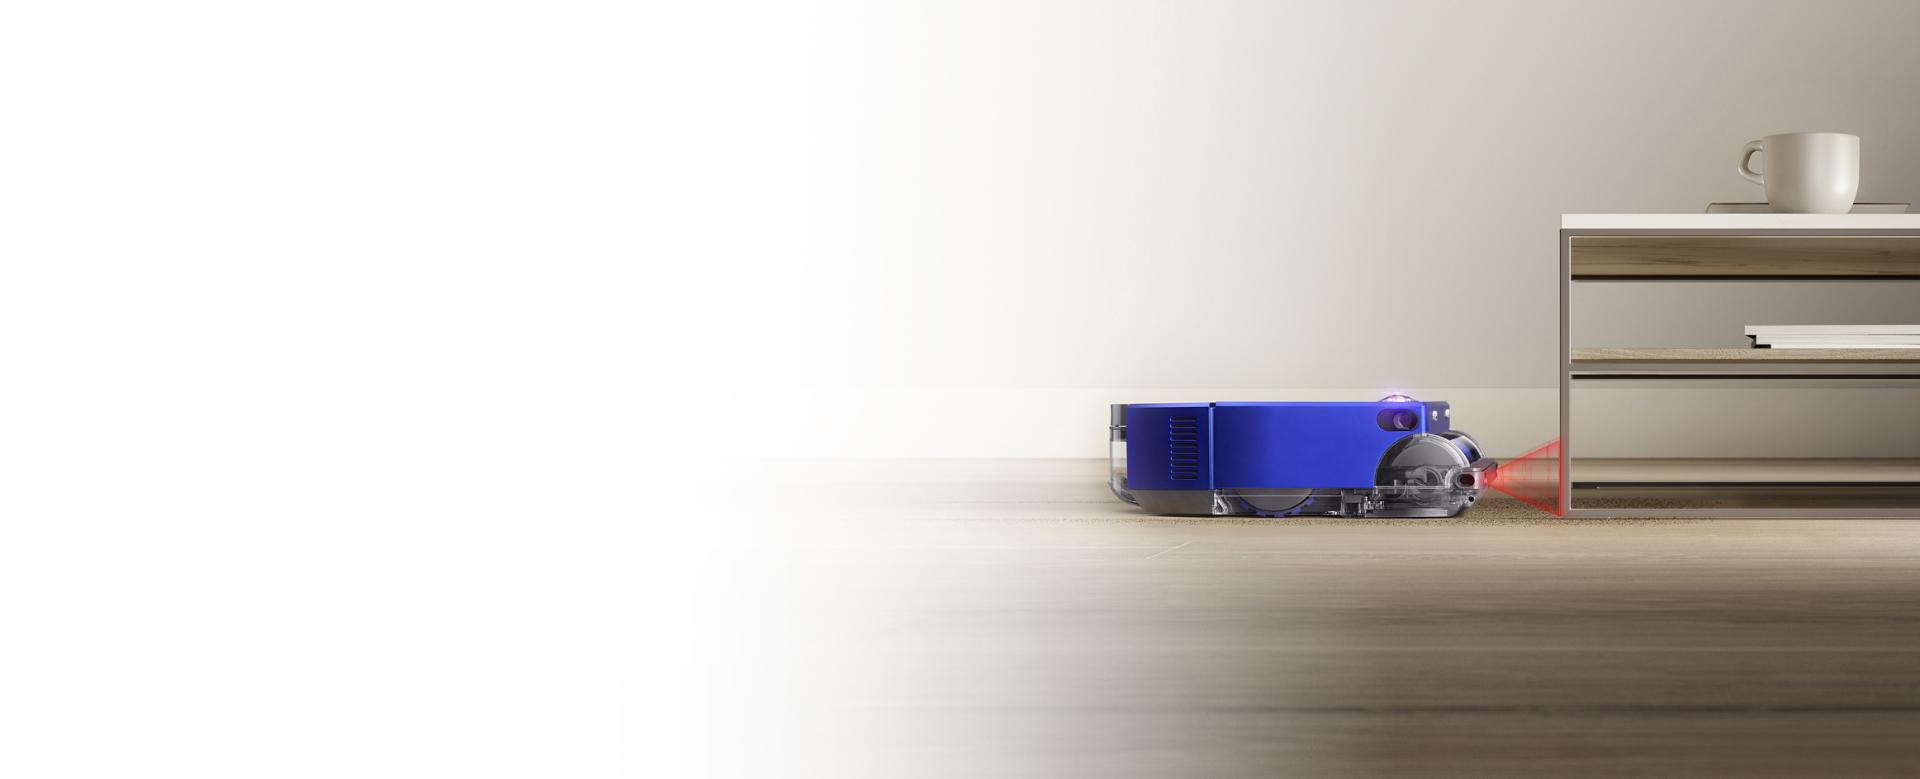 Dyson 360 Vis Nav robot vacuum encountering a table